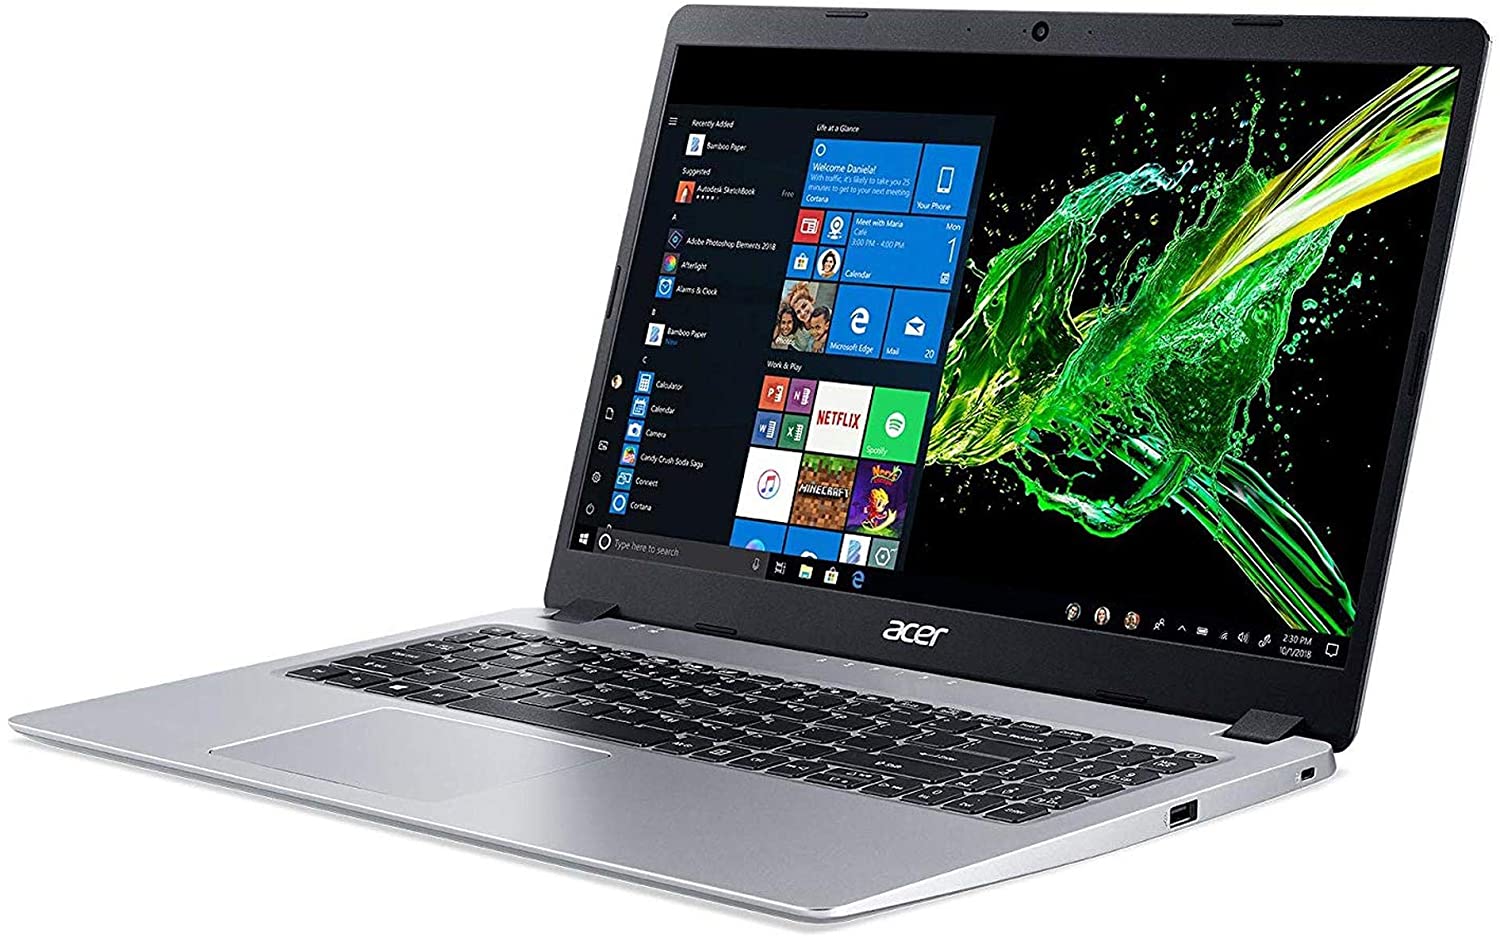 Acer Aspire 5 15.6" FHD Laptop Computer, AMD Ryzen 3 3200U Up to 3.5GHz (Beats i5-7200U), 4GB DDR4 RAM, 128GB PCIe SSD, 802.11ac WiFi, HDMI, Backlit Keyboard, Silver, Windows 10 Home in S Mode - image 1 of 6